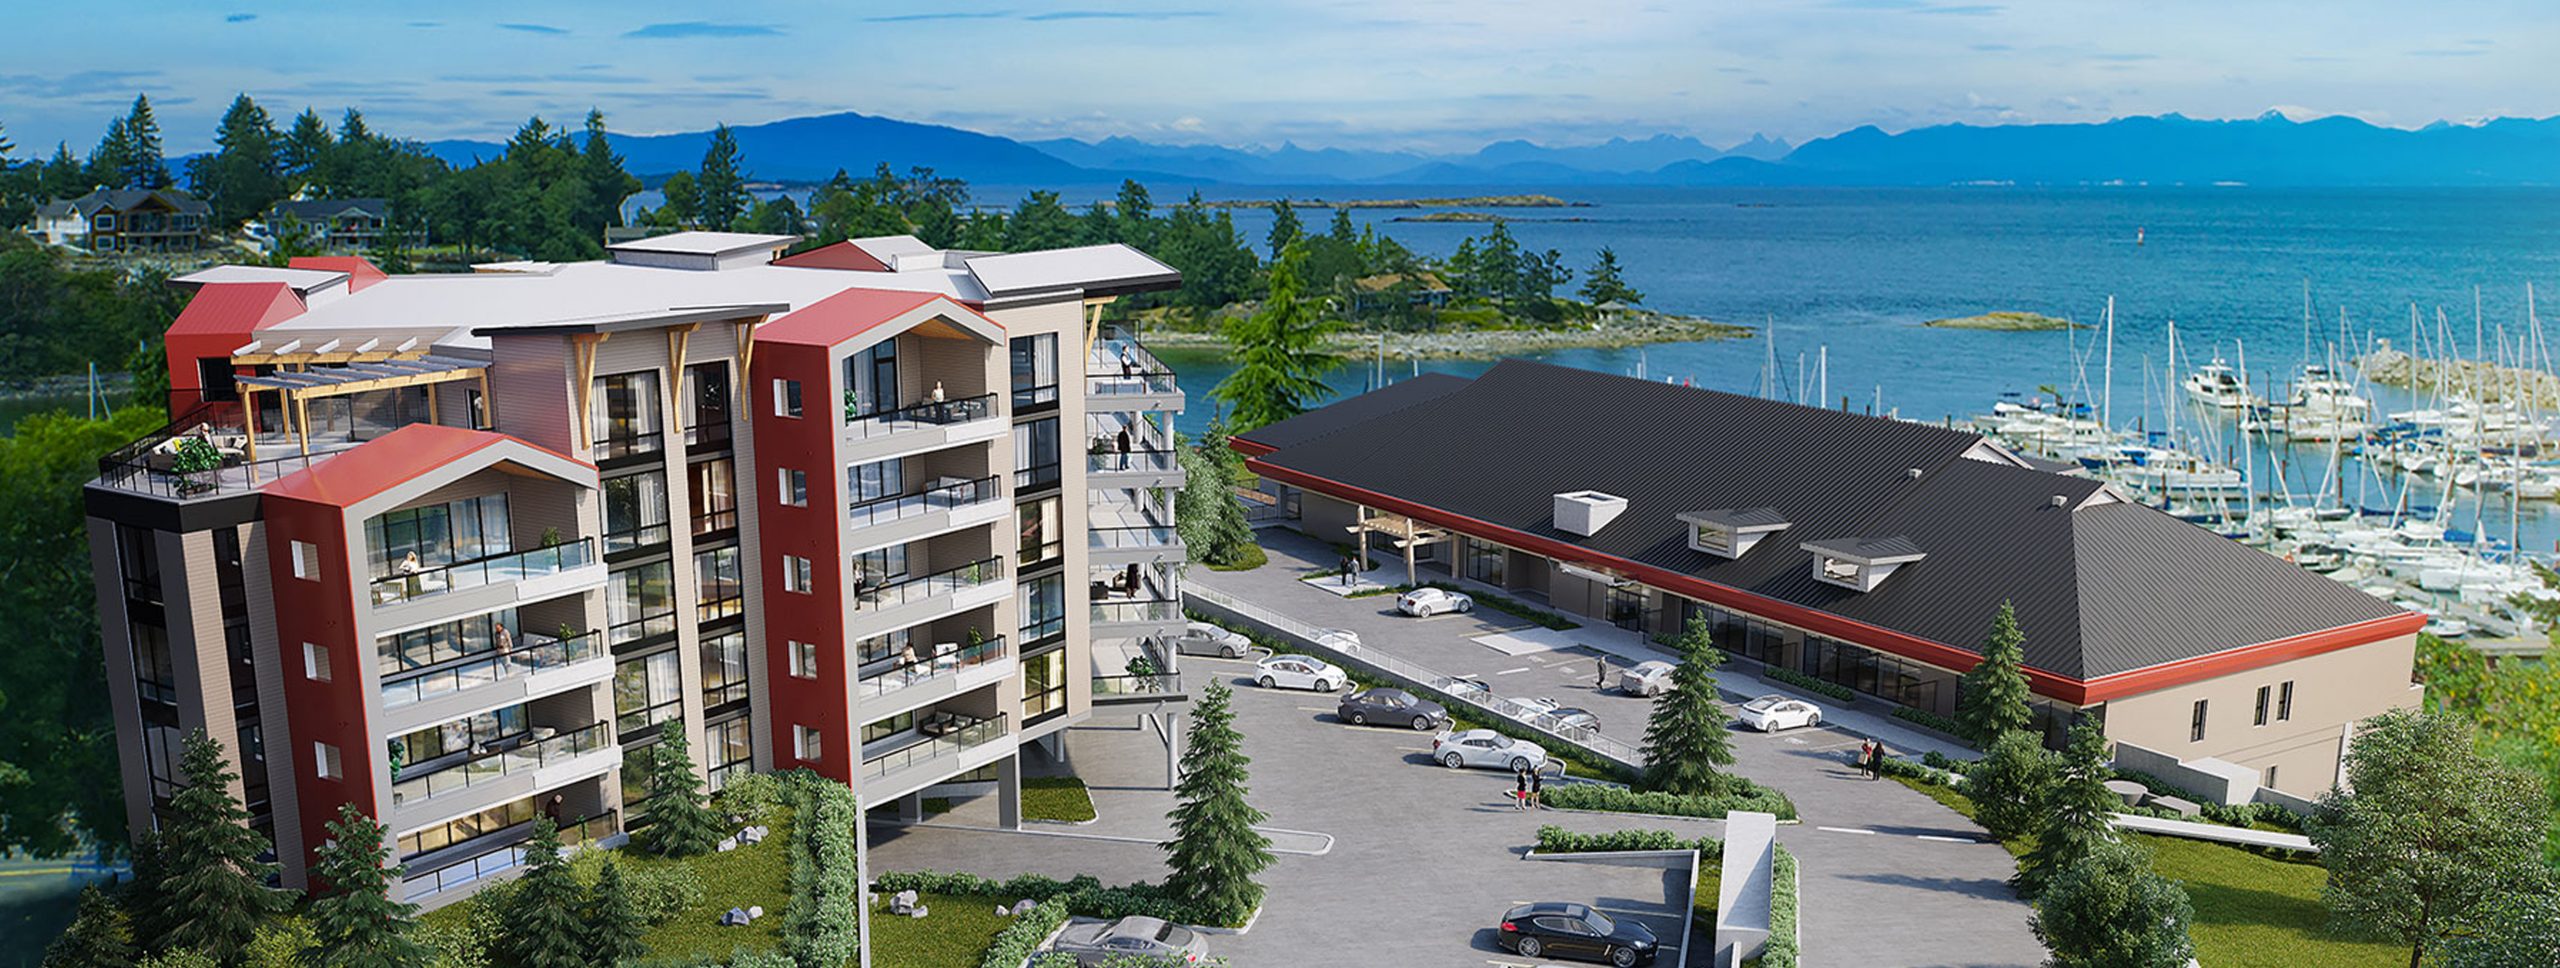 J.E. Anderson & Associates Vancouver Island Projects